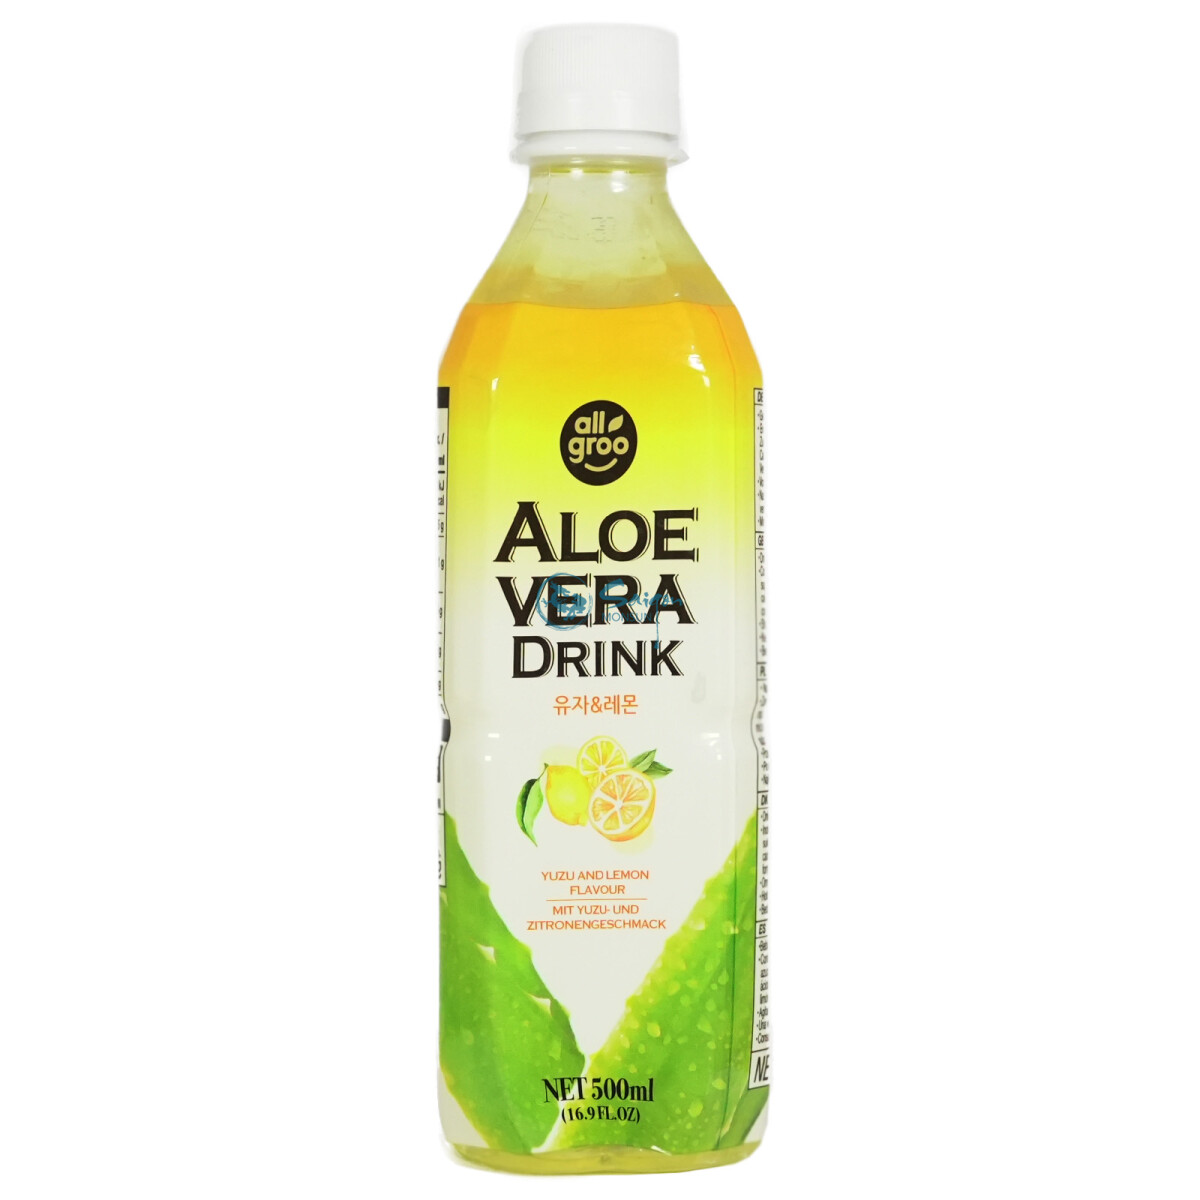 Allgro Aloe Vera Drink Yuzu Lemon Geschmack 500ml zzgl....